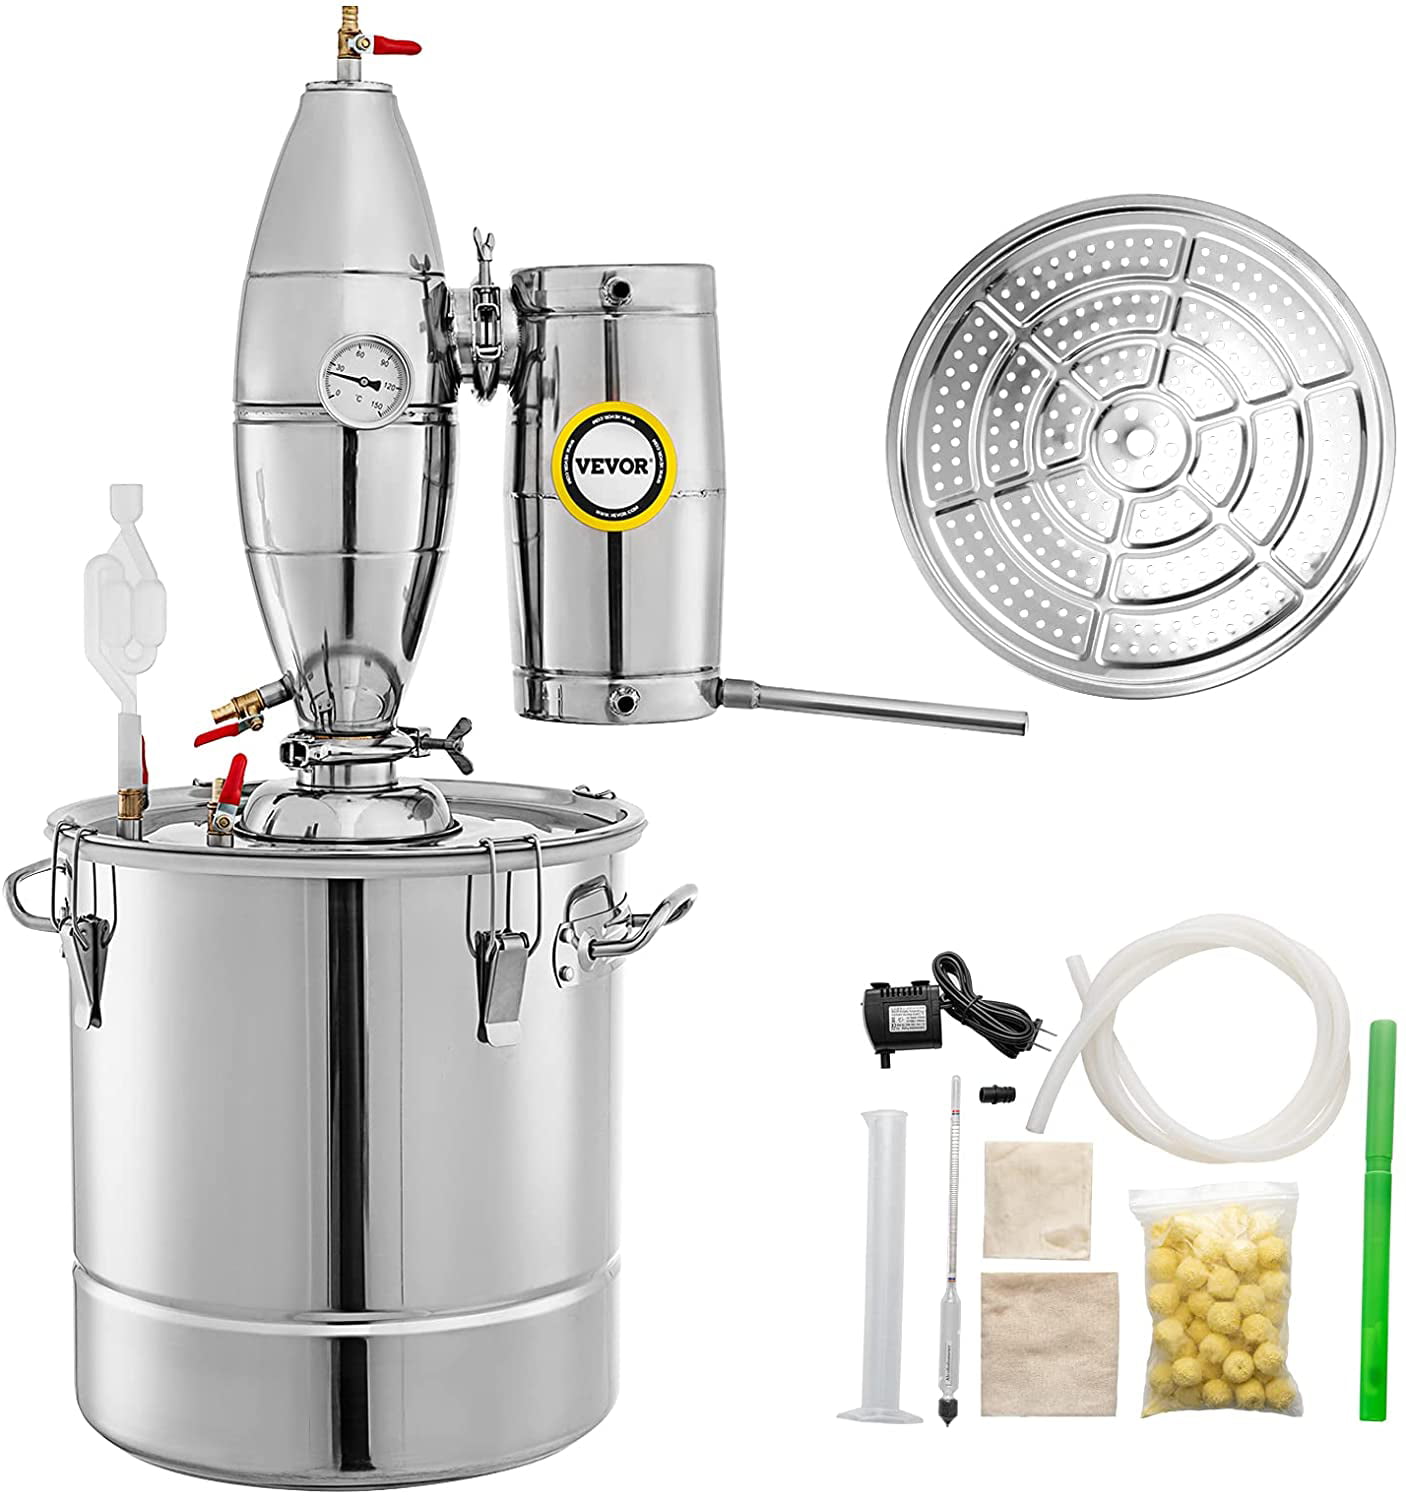 Distilling Carbon Clean Rings Distilling SetUp Smart Parts & Accessories 